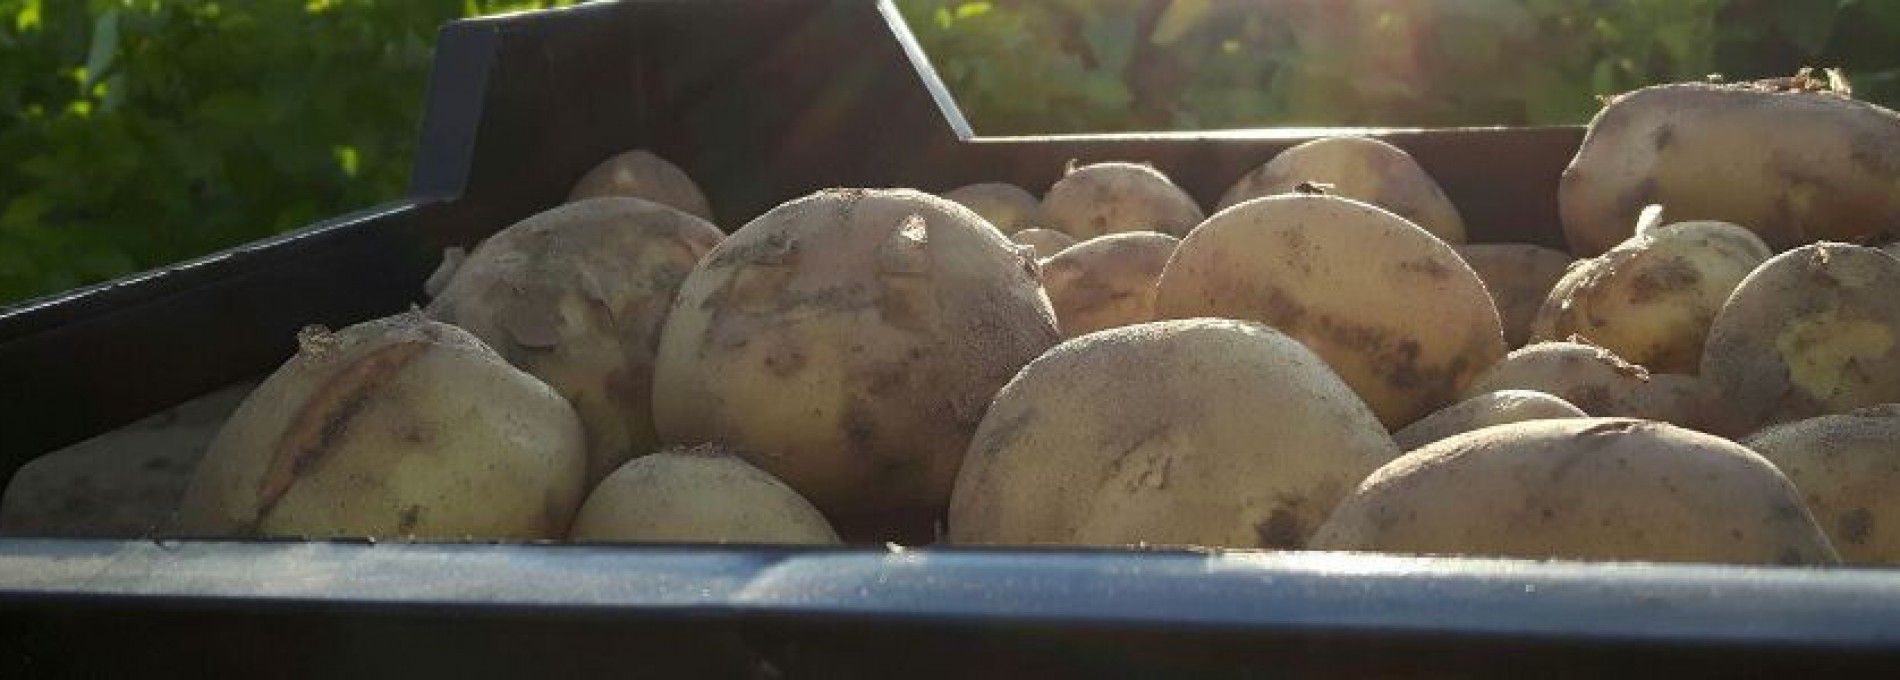 Amelander aardappelen - Amelands Produkt - VVV Ameland